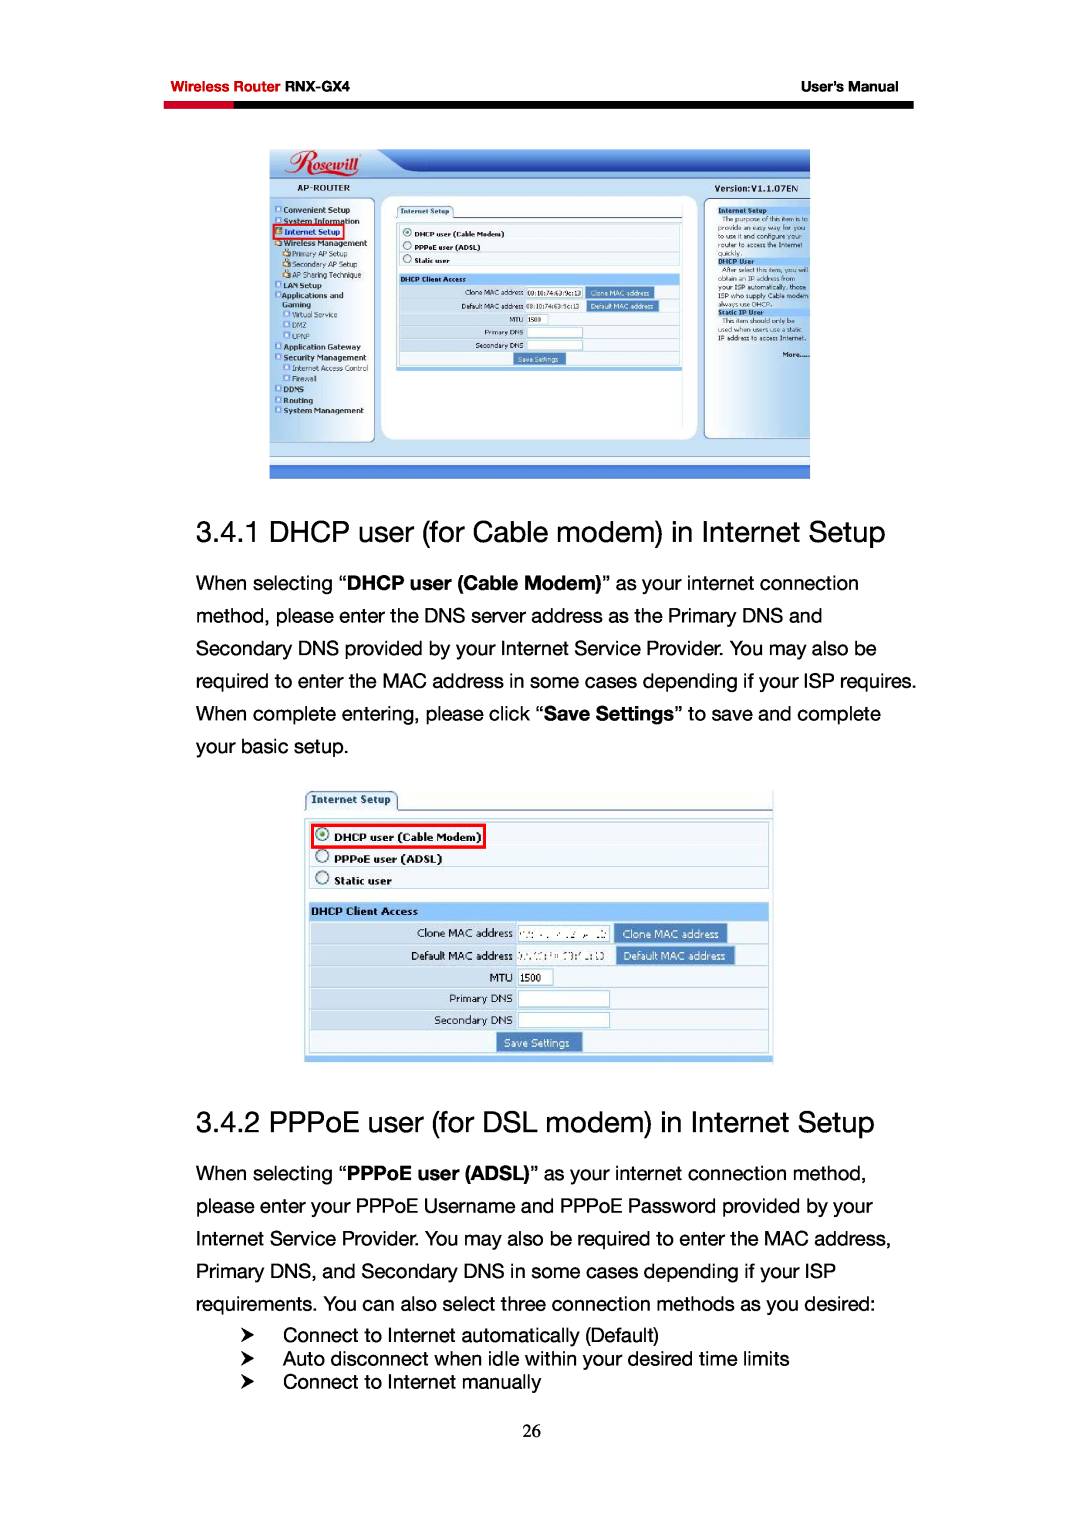 Rosewill RNX-GX4 user manual DHCP user for Cable modem in Internet Setup, PPPoE user for DSL modem in Internet Setup 